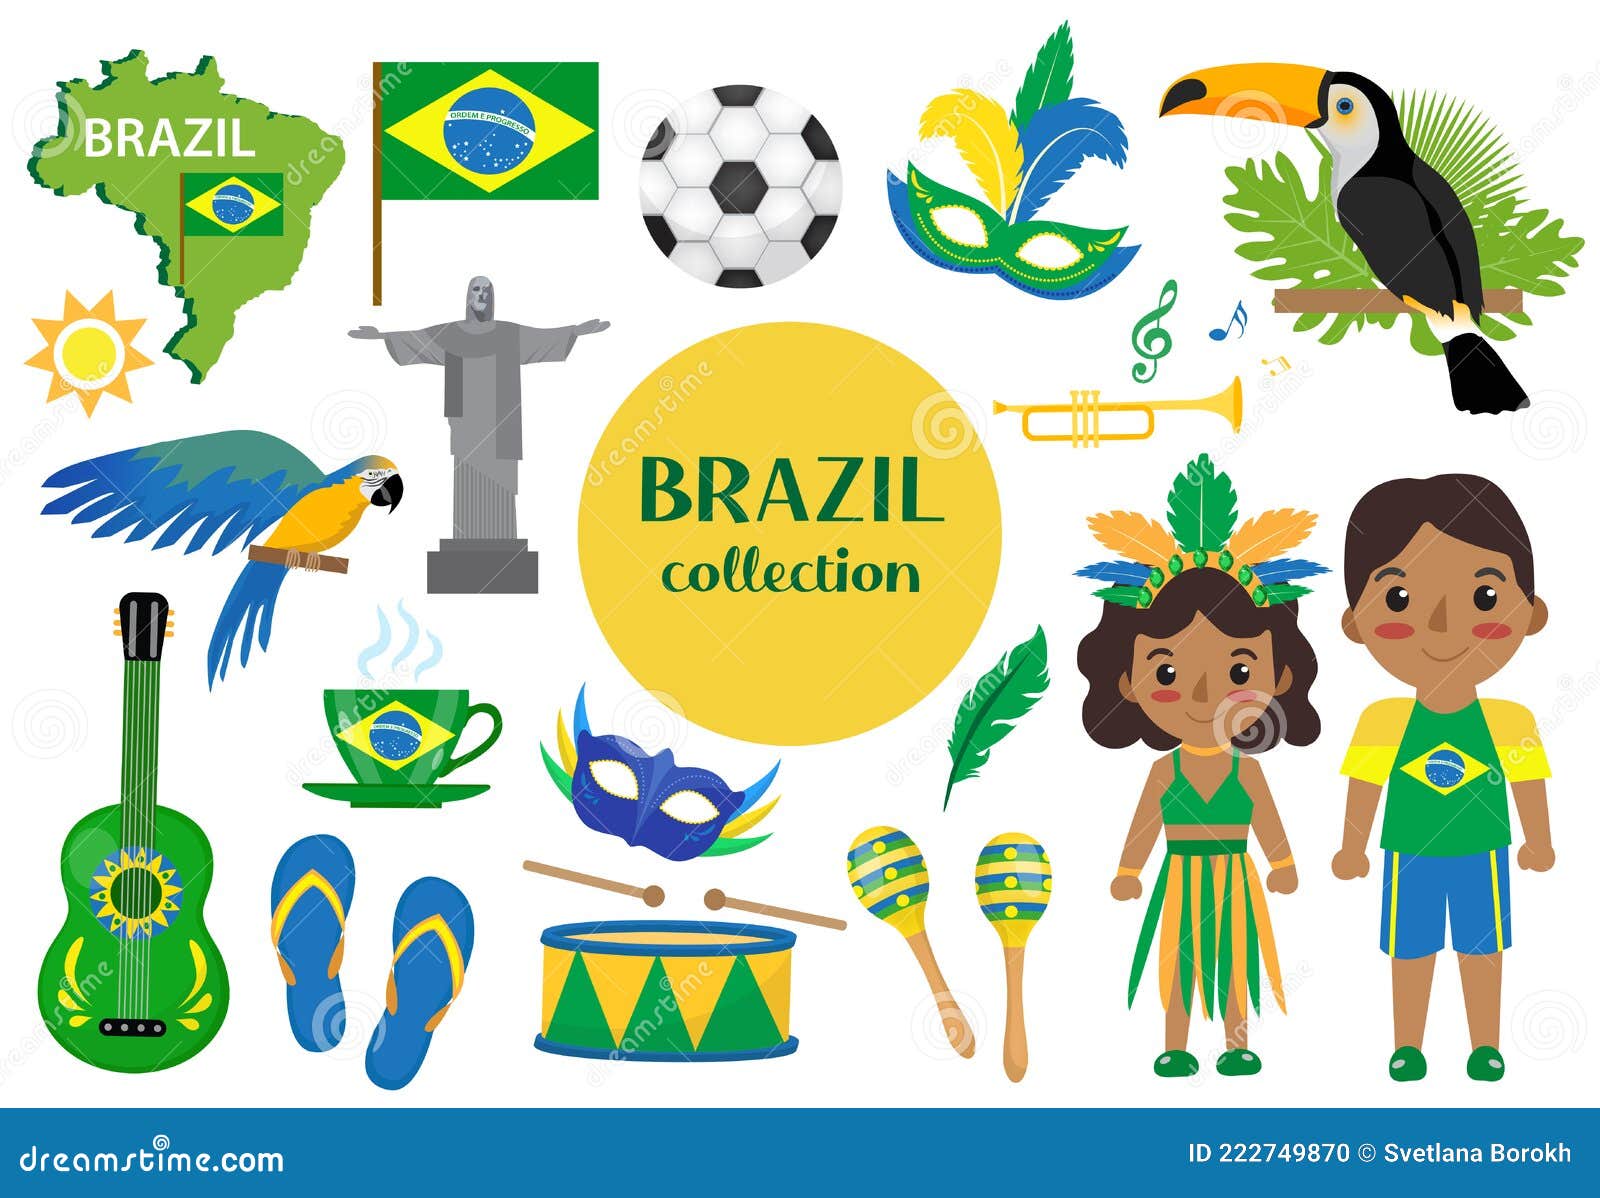 Brazilian collection.